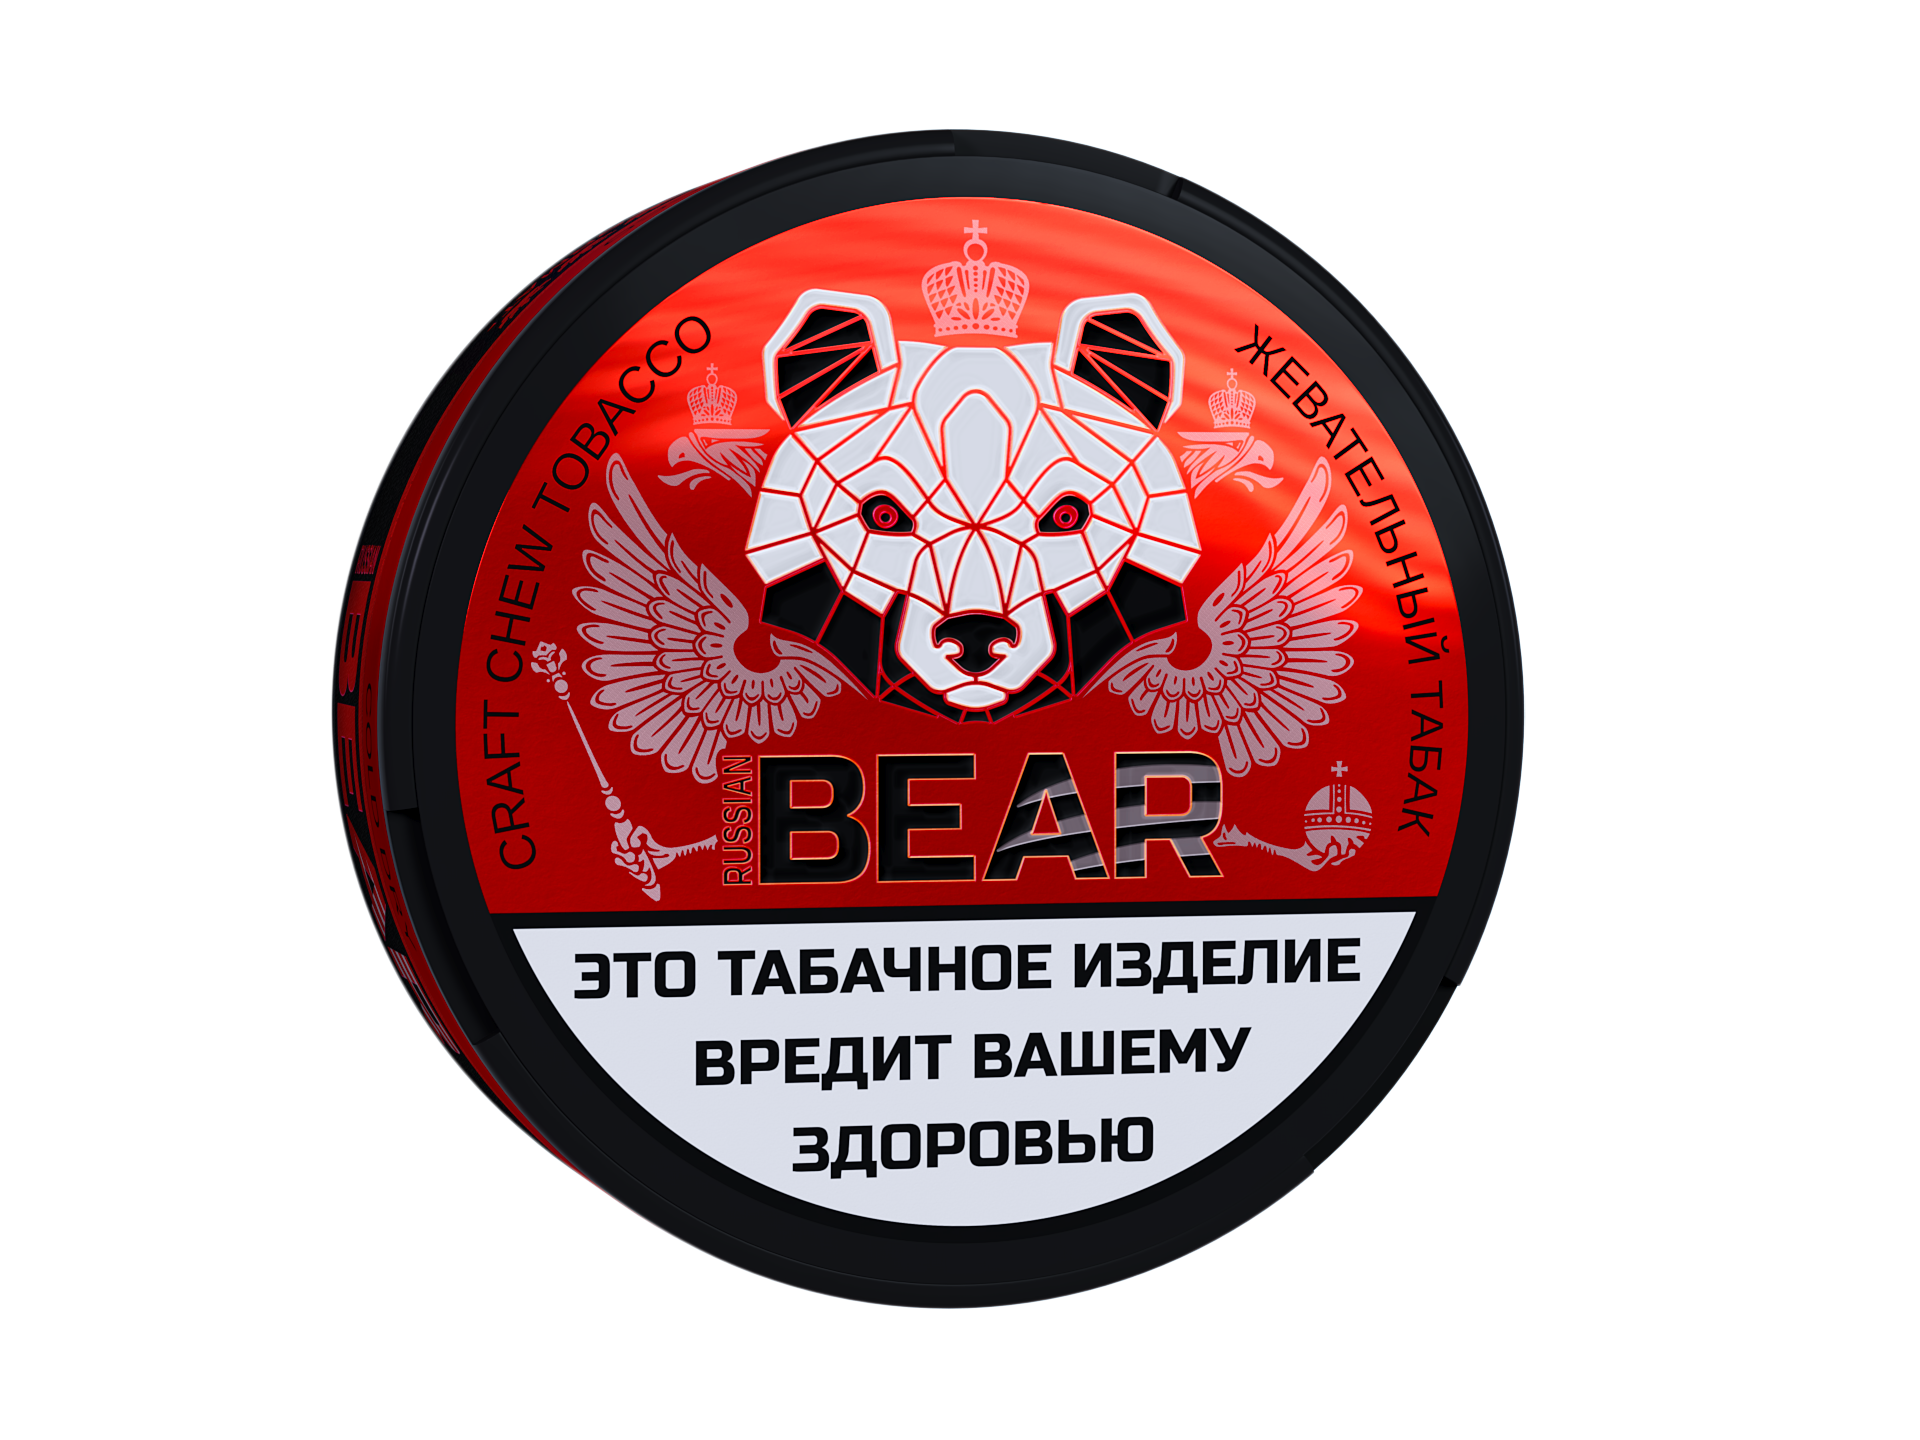 Жевательный табак Russian Bear со вкусом Cold dry